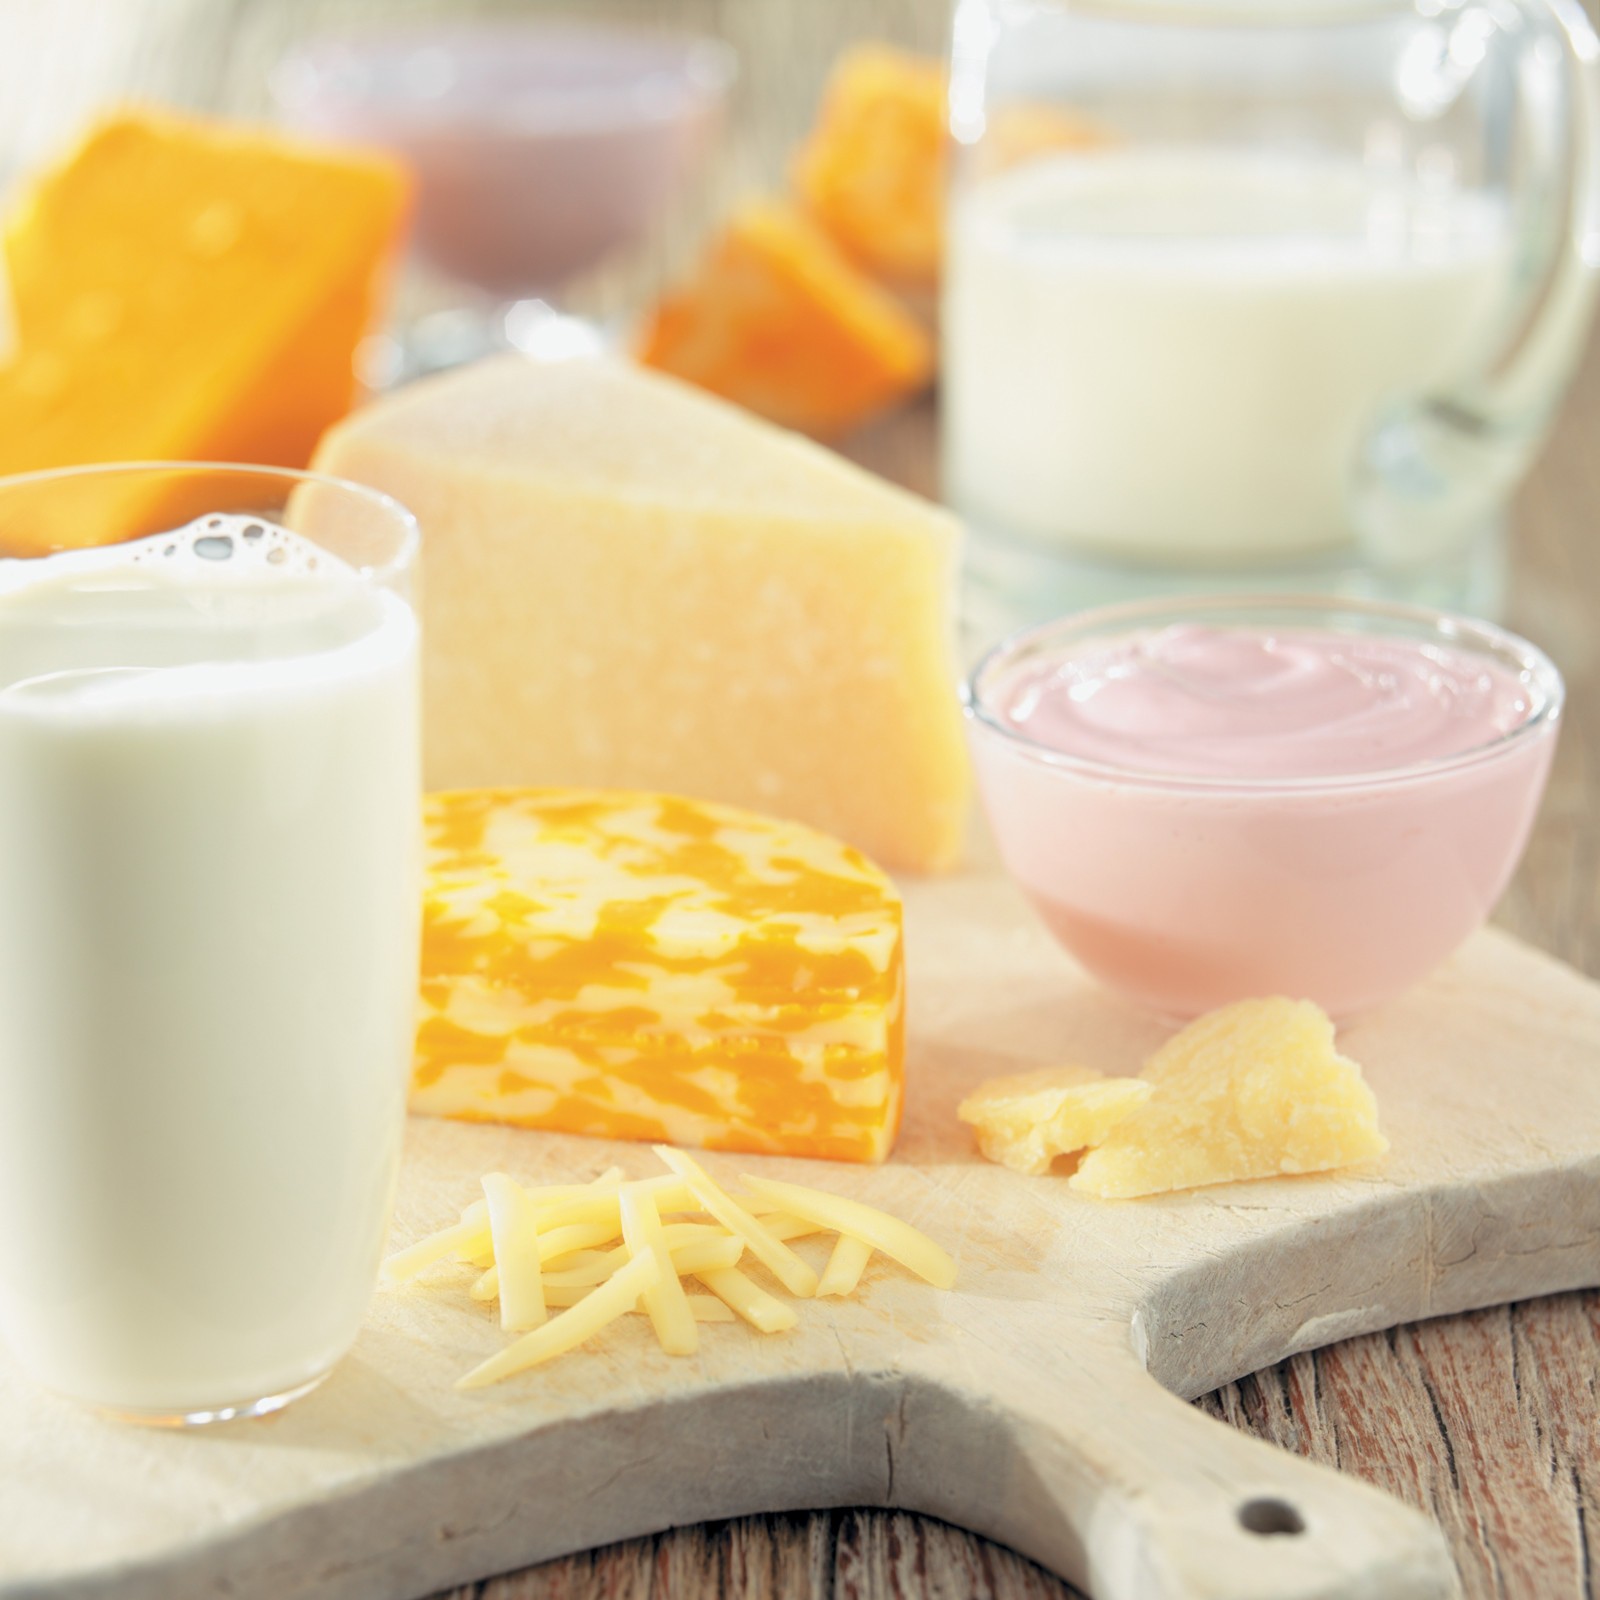 حساسیت به شیر - شیر و پنیر